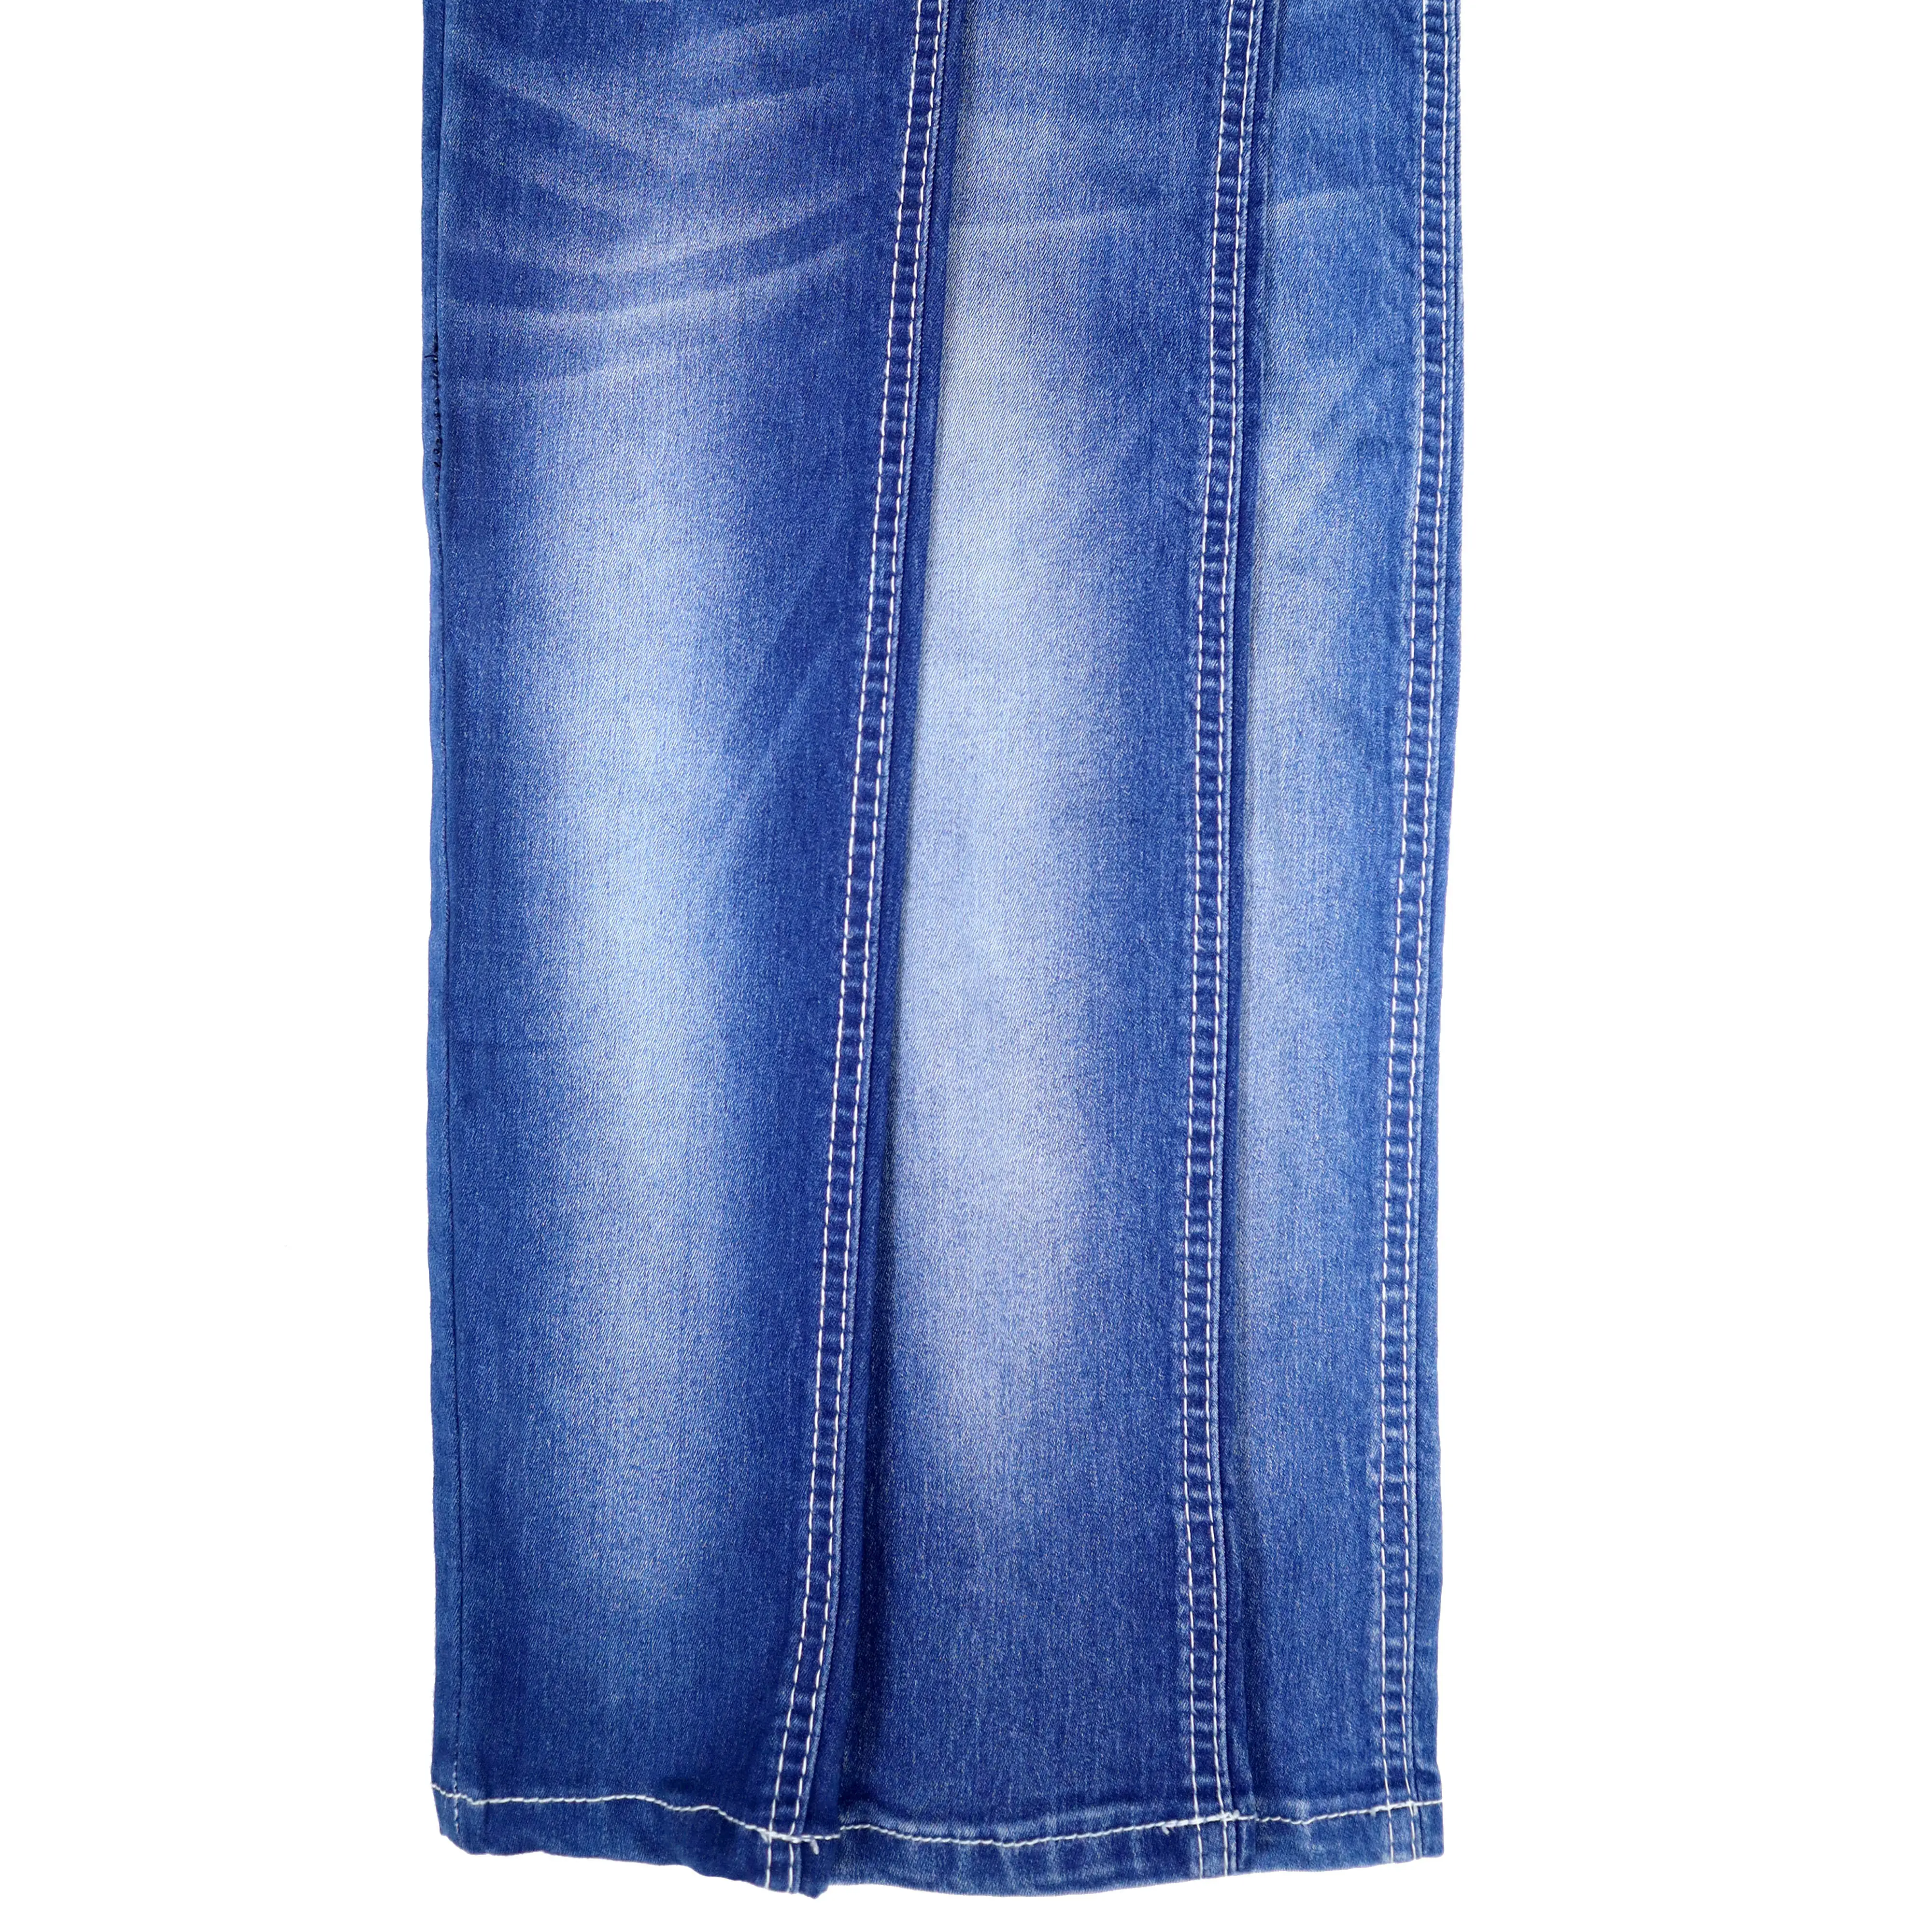 GP3211-16F 72% cotton 27% polyester 1% spandex Stretch Cotton Polyester Blue Denim Jeans Fabric cotton polyester denim fabric